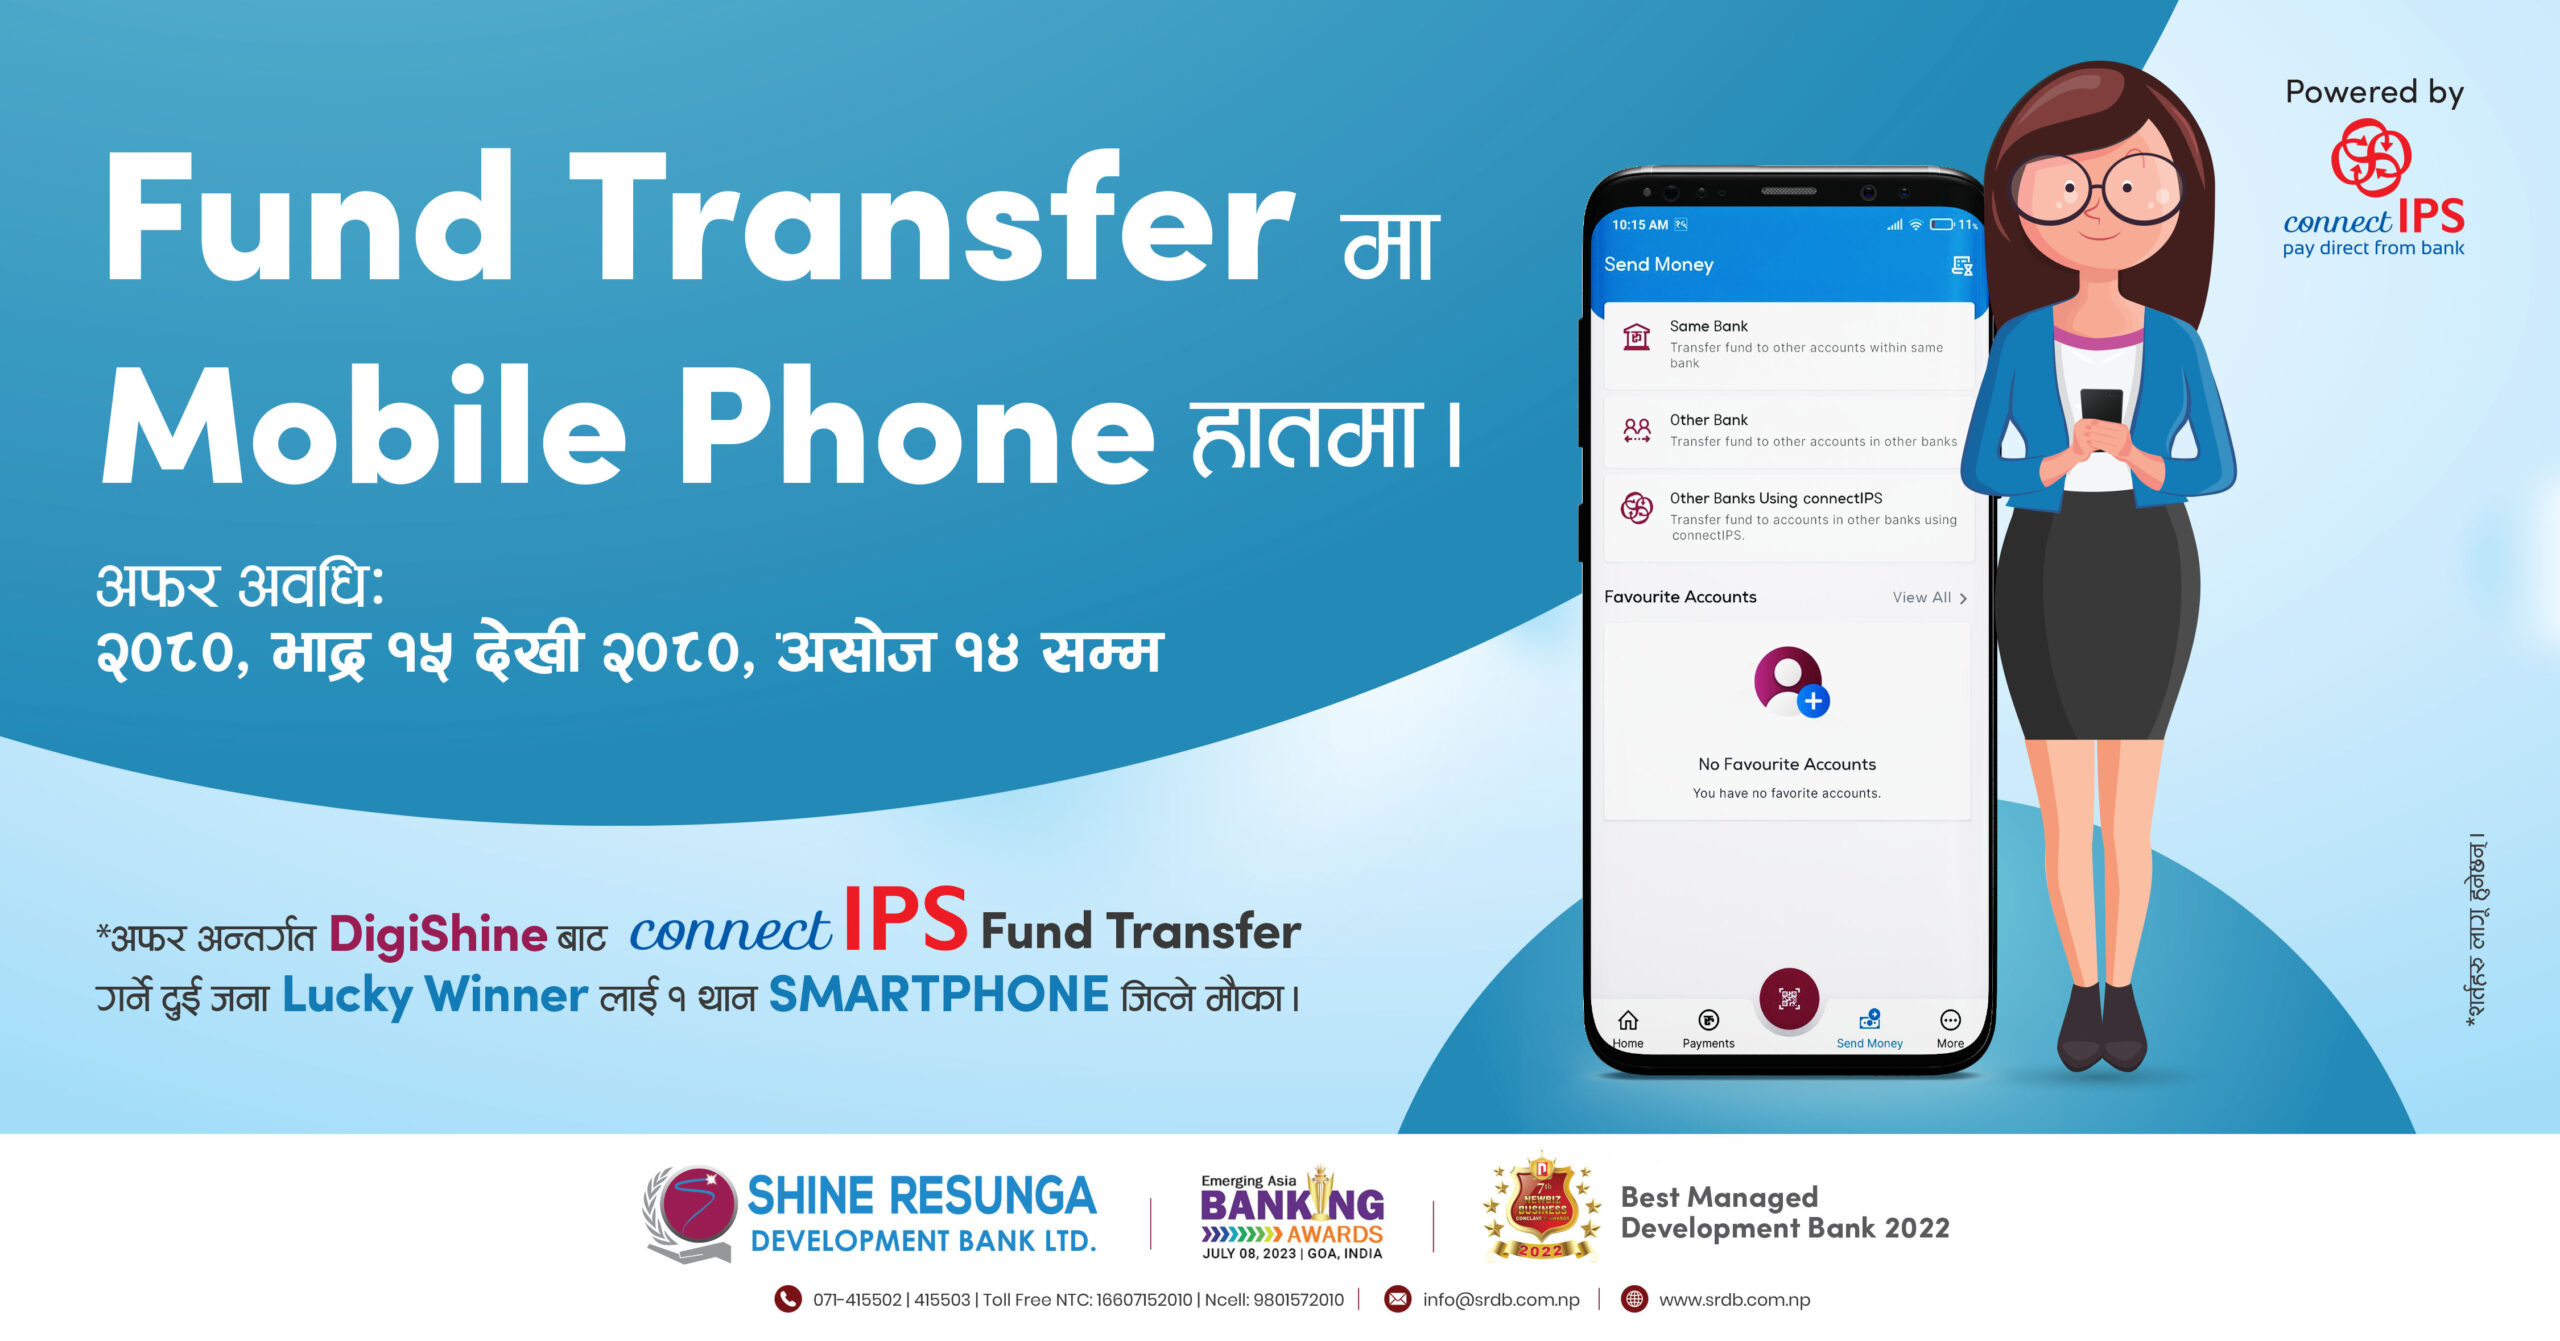 Shine Resunga Development Bank launches ‘Fund Transfer Ma Mobile Phone Haathma Offer’